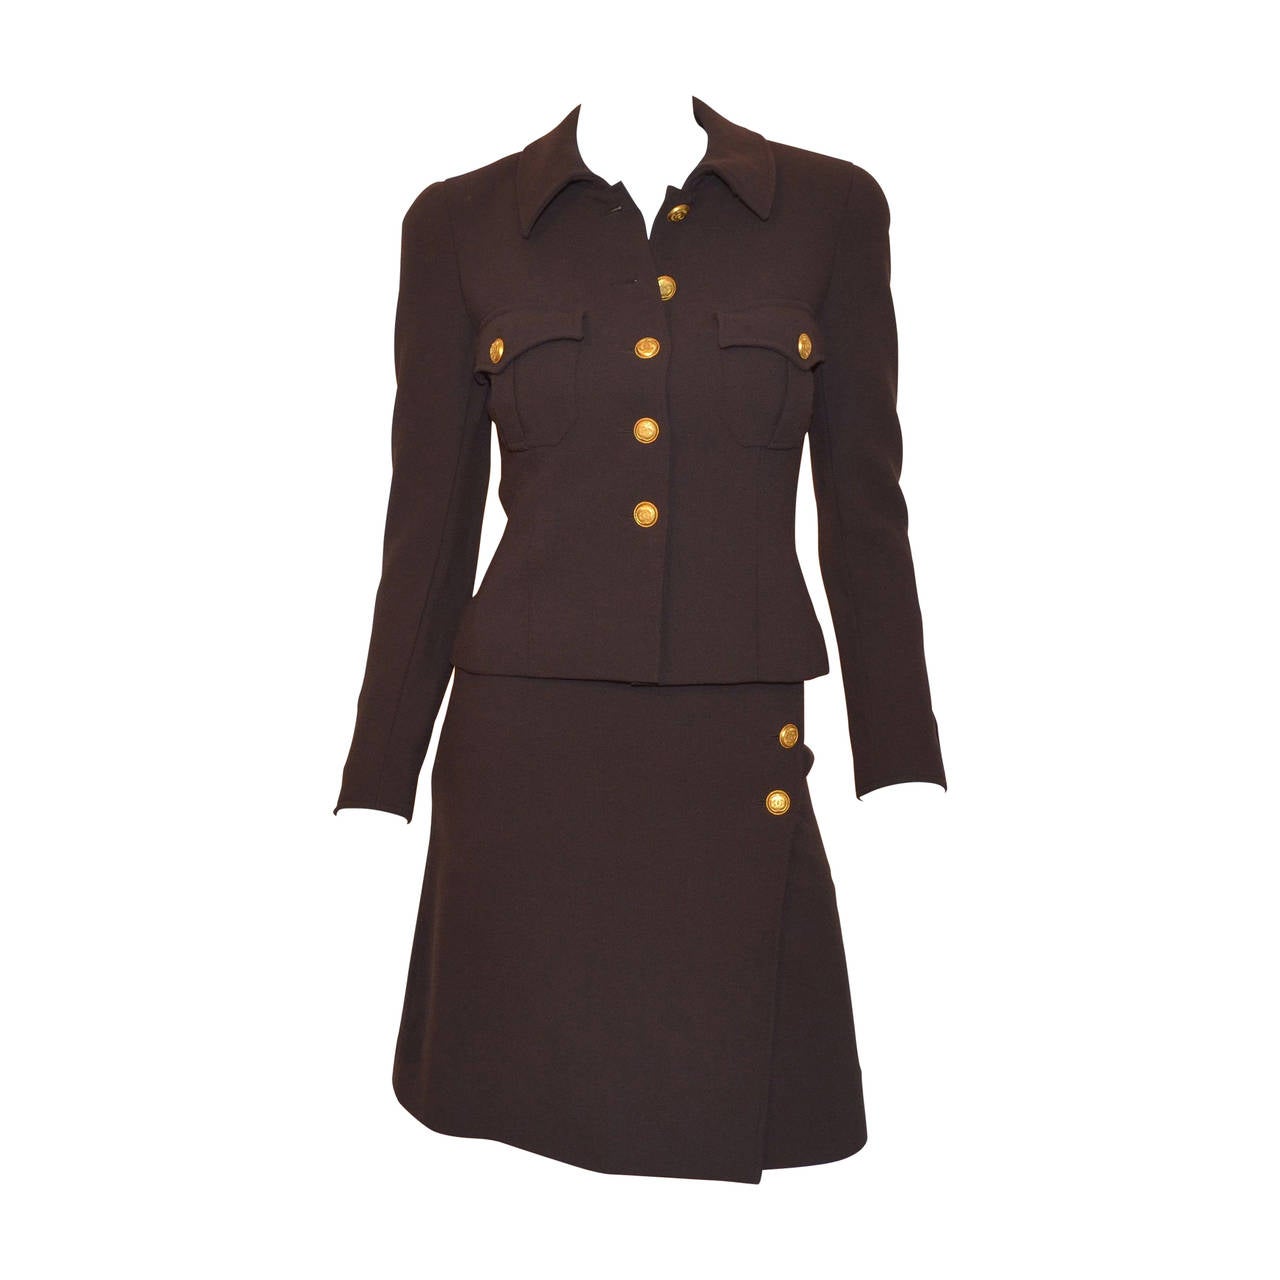 Chanel 1996 Vintage Brown Wool Ensemble Skirt Suit